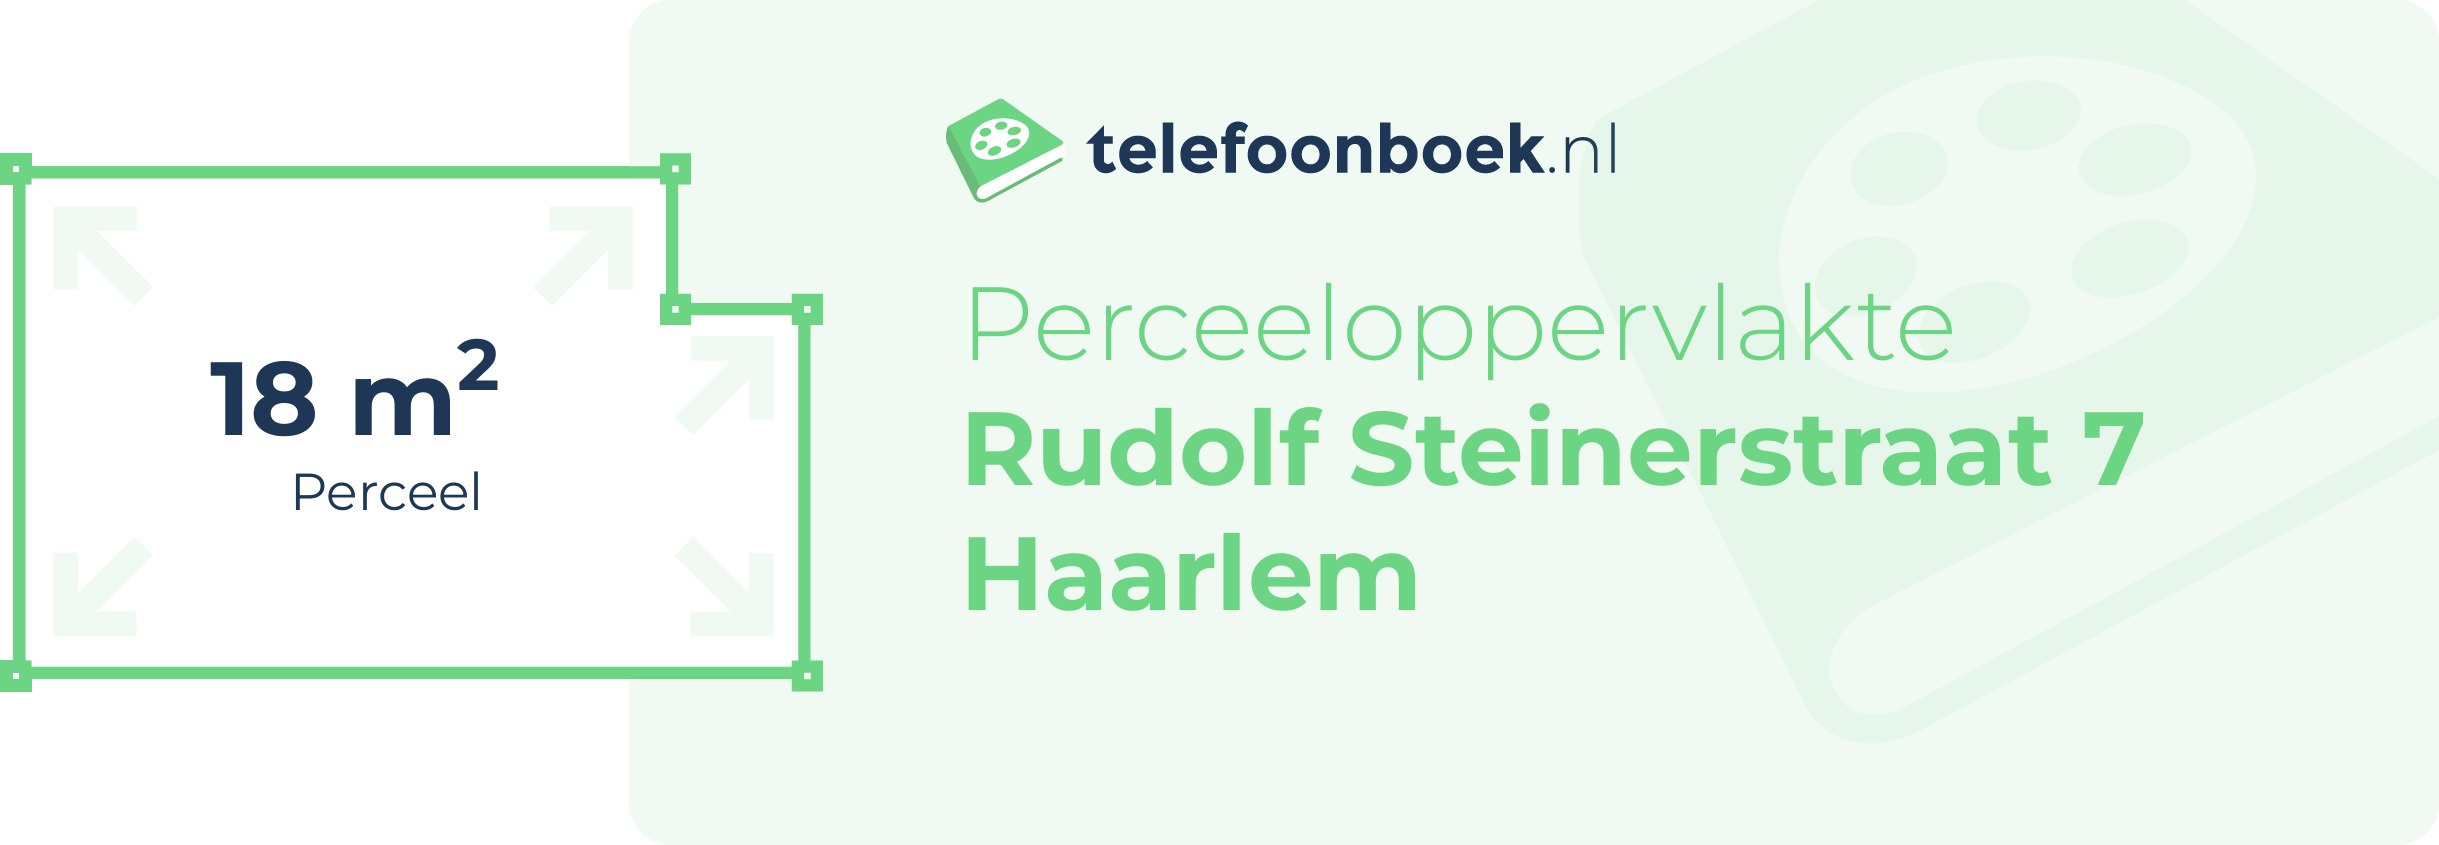 Perceeloppervlakte Rudolf Steinerstraat 7 Haarlem